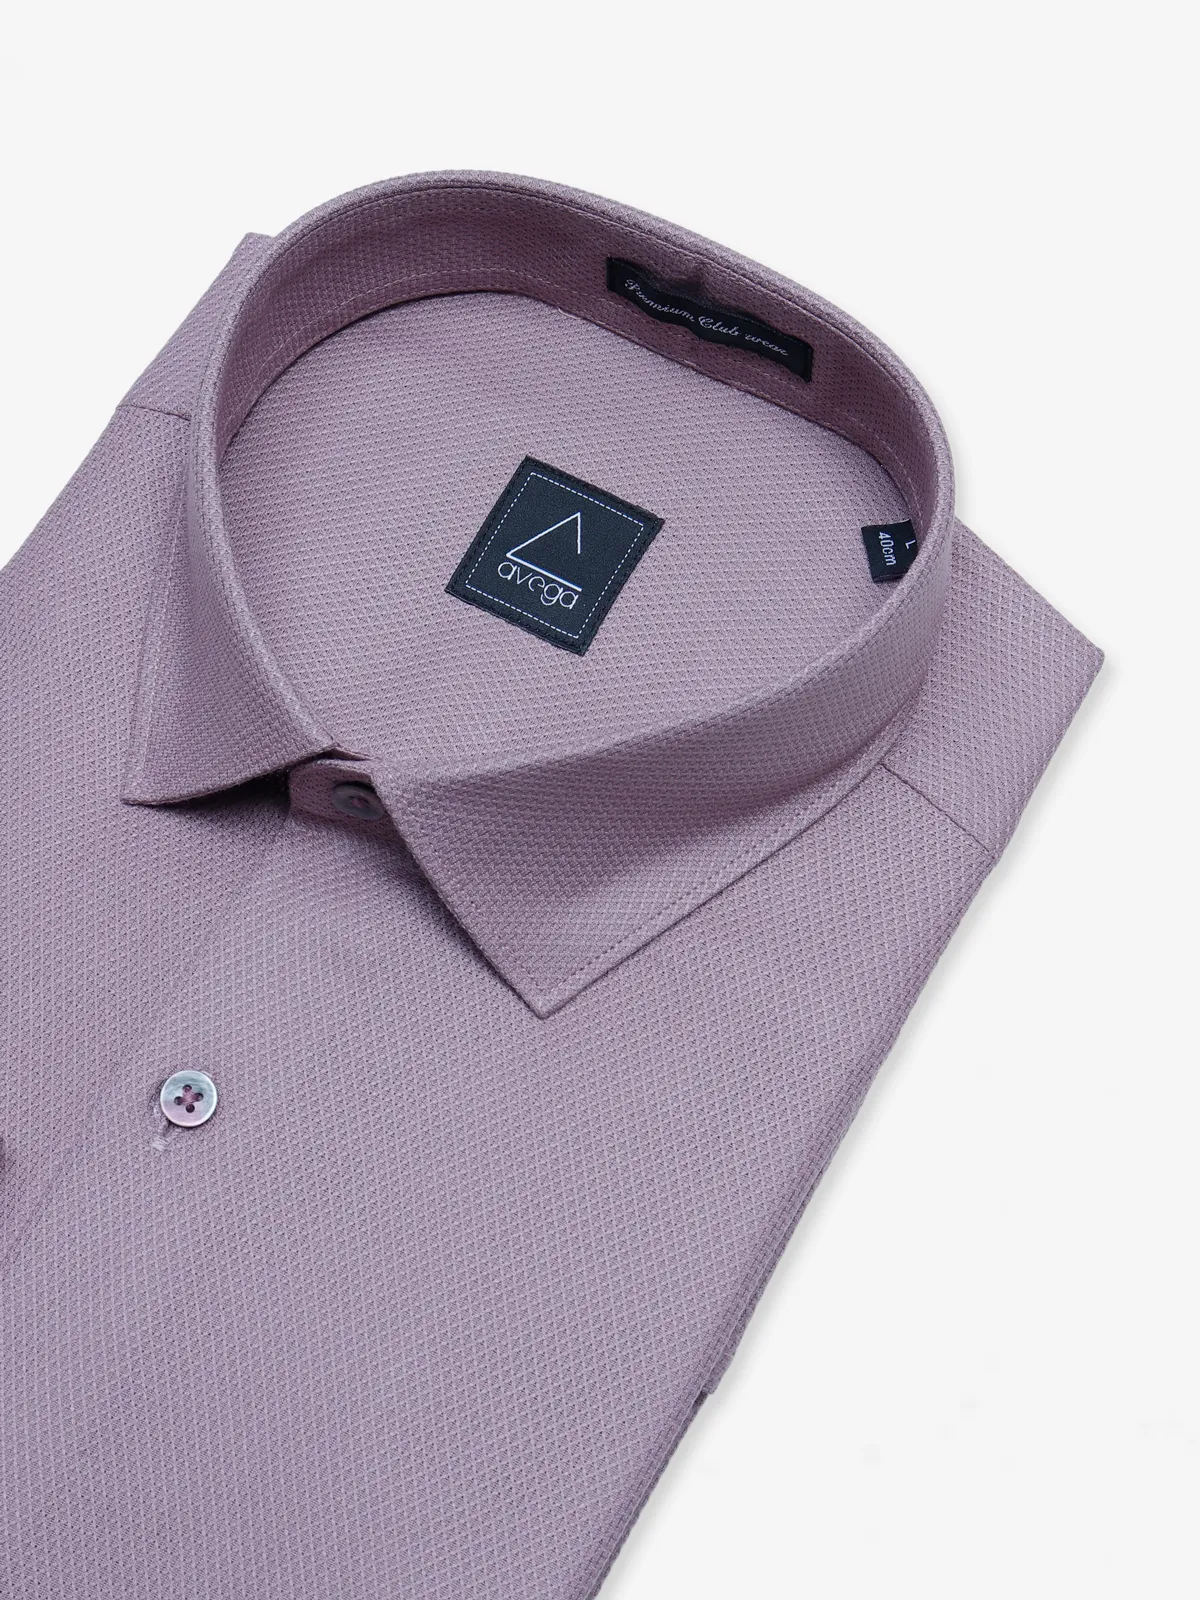 Avega light purple cotton textured shirt